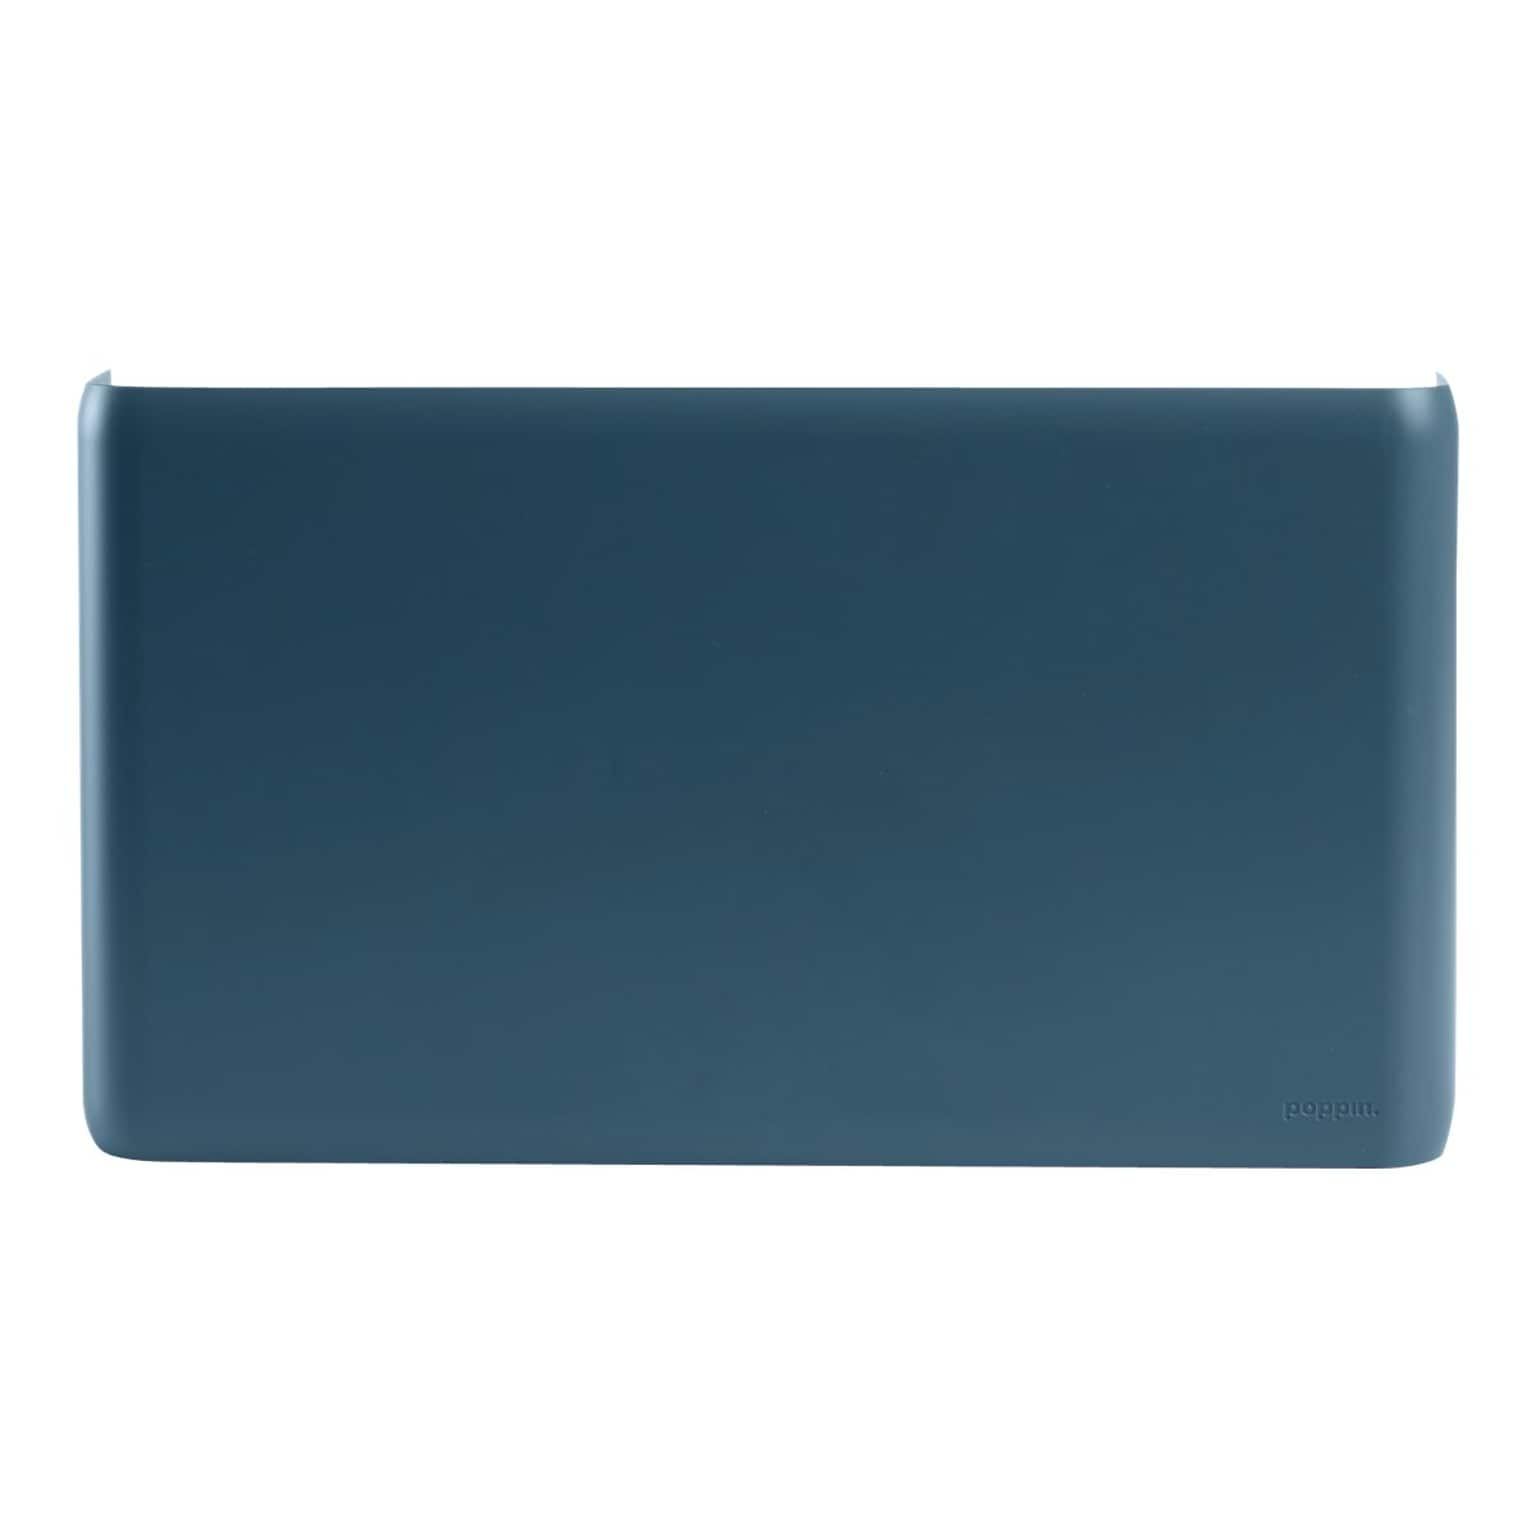 Poppin 1-Pocket Plastic Letter Size Wall File, Slate Blue (105093)